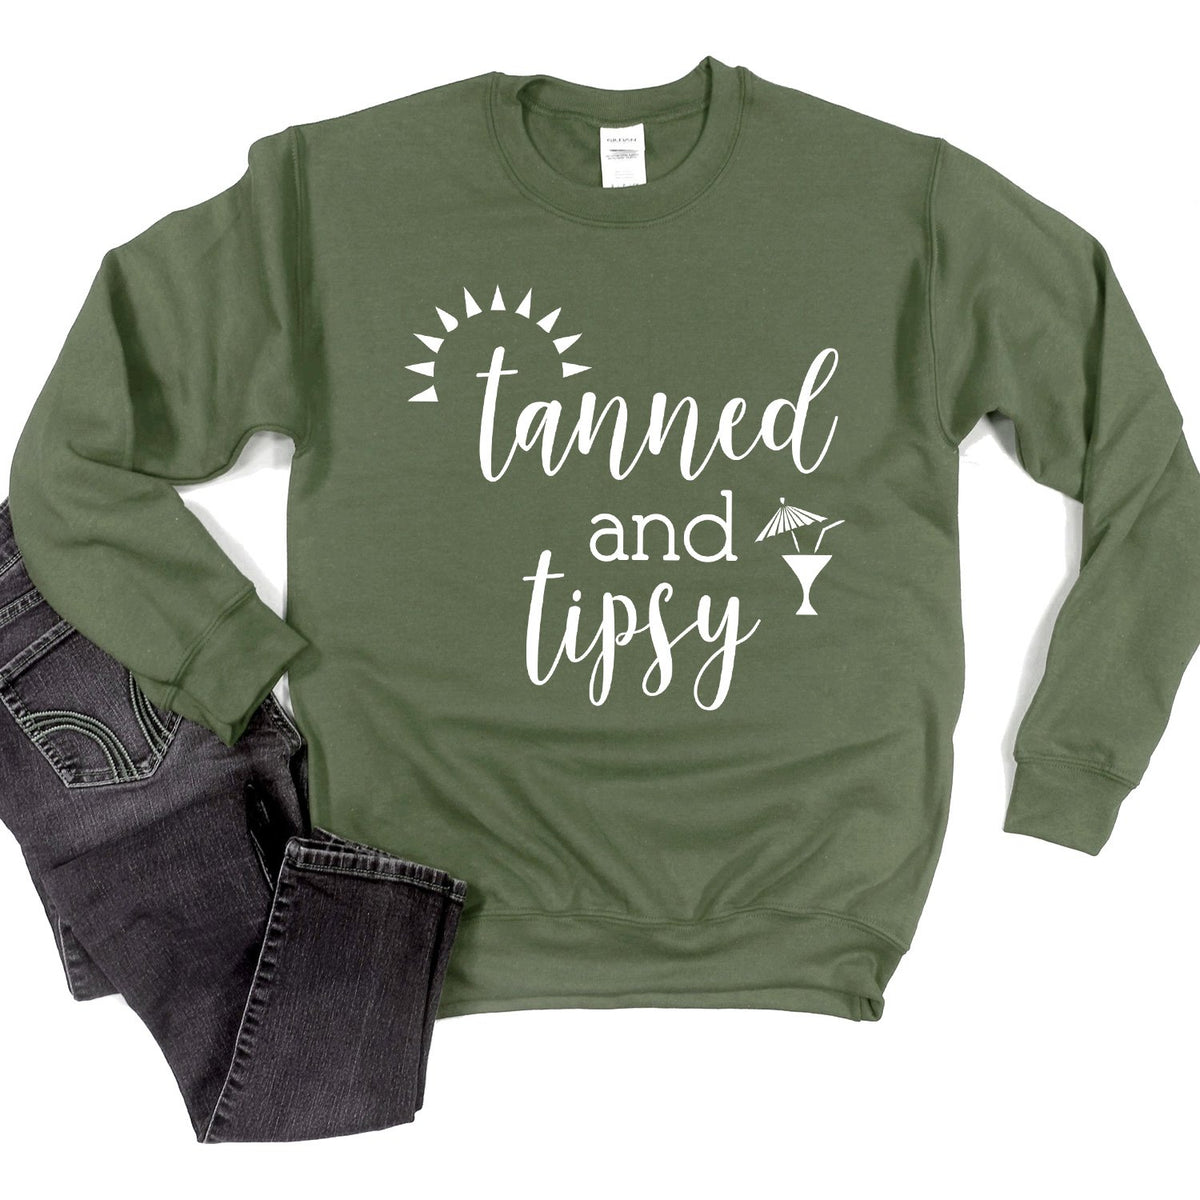 Tanned and Tipsy - Long Sleeve Heavy Crewneck Sweatshirt